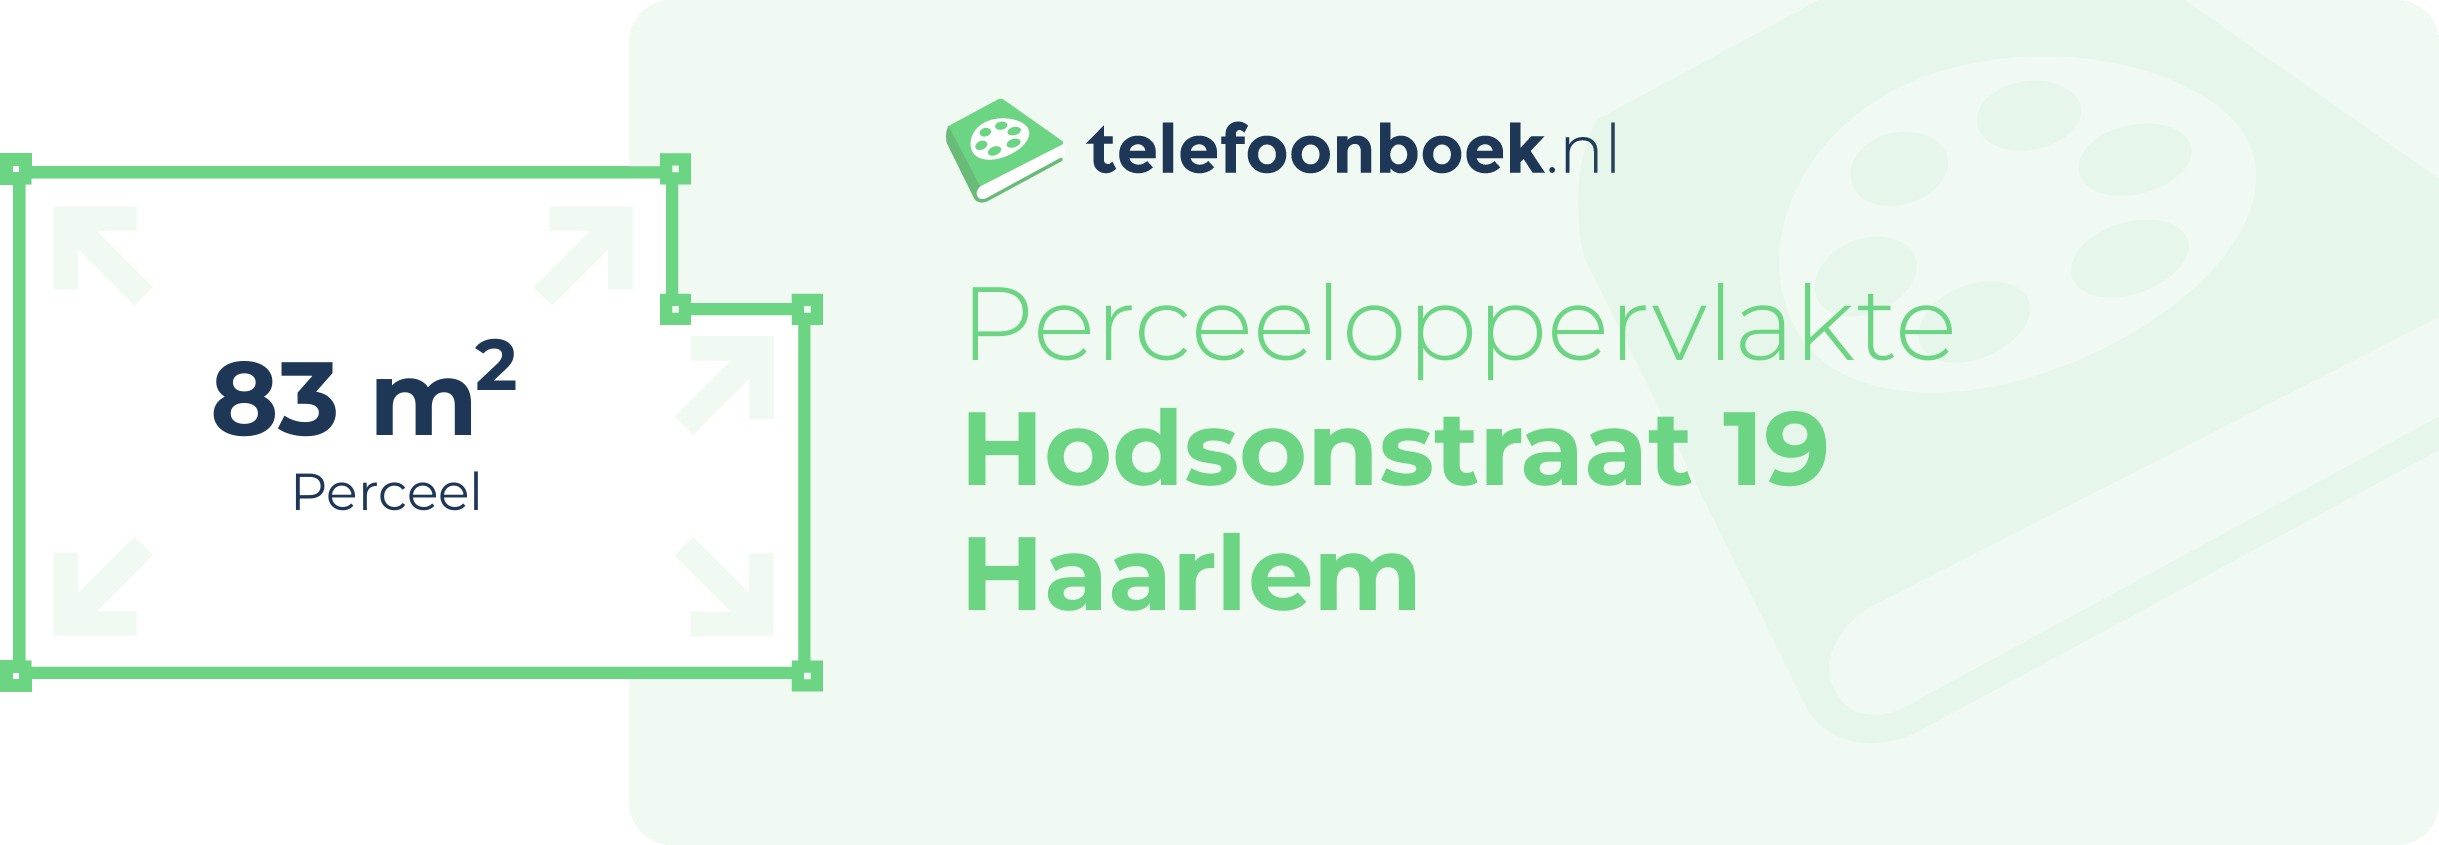 Perceeloppervlakte Hodsonstraat 19 Haarlem